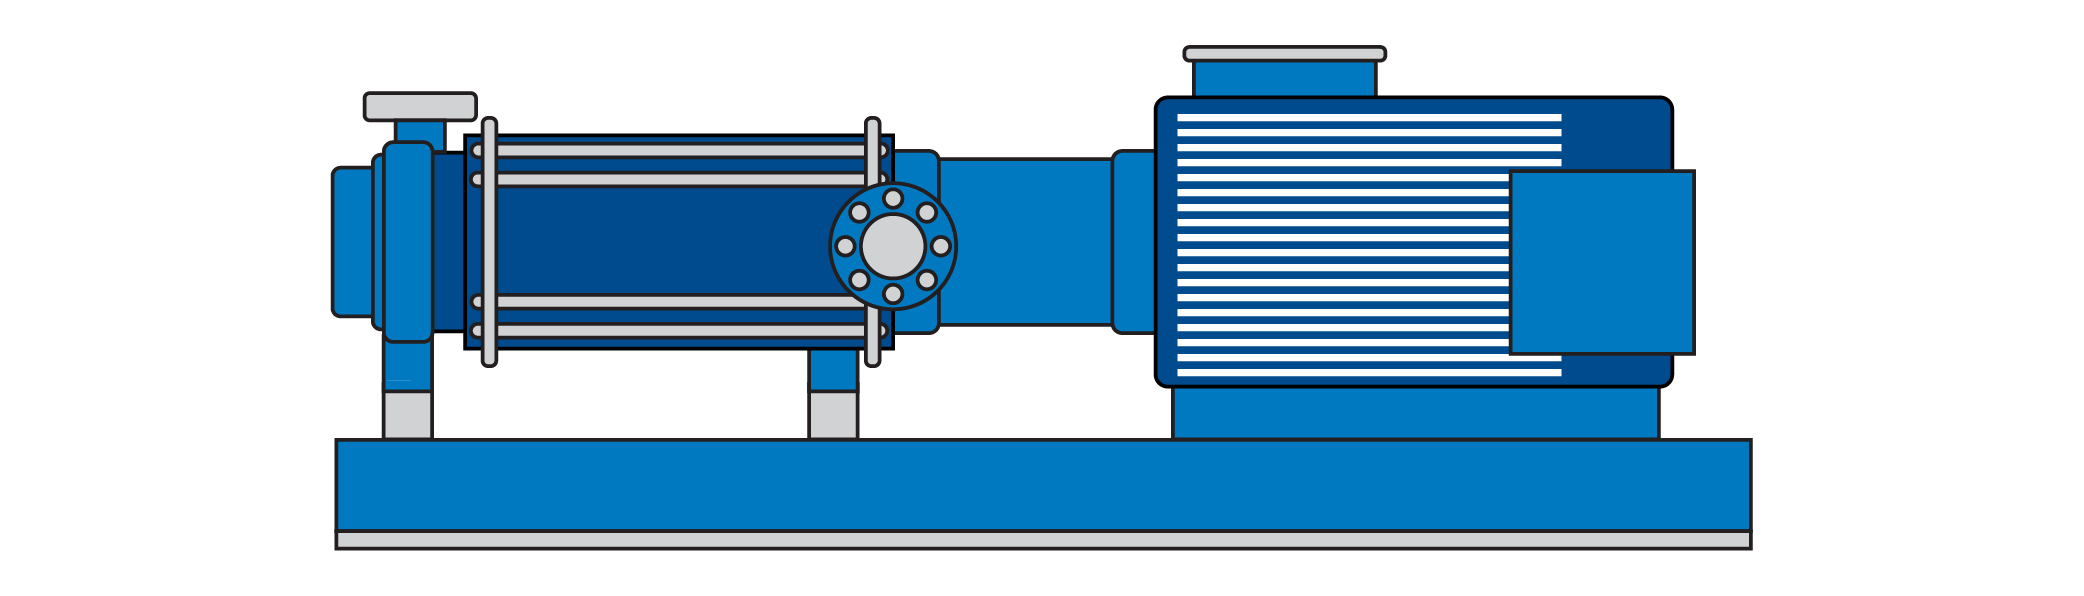 Boiler Feed Water Pump (Motor or Steam driven)